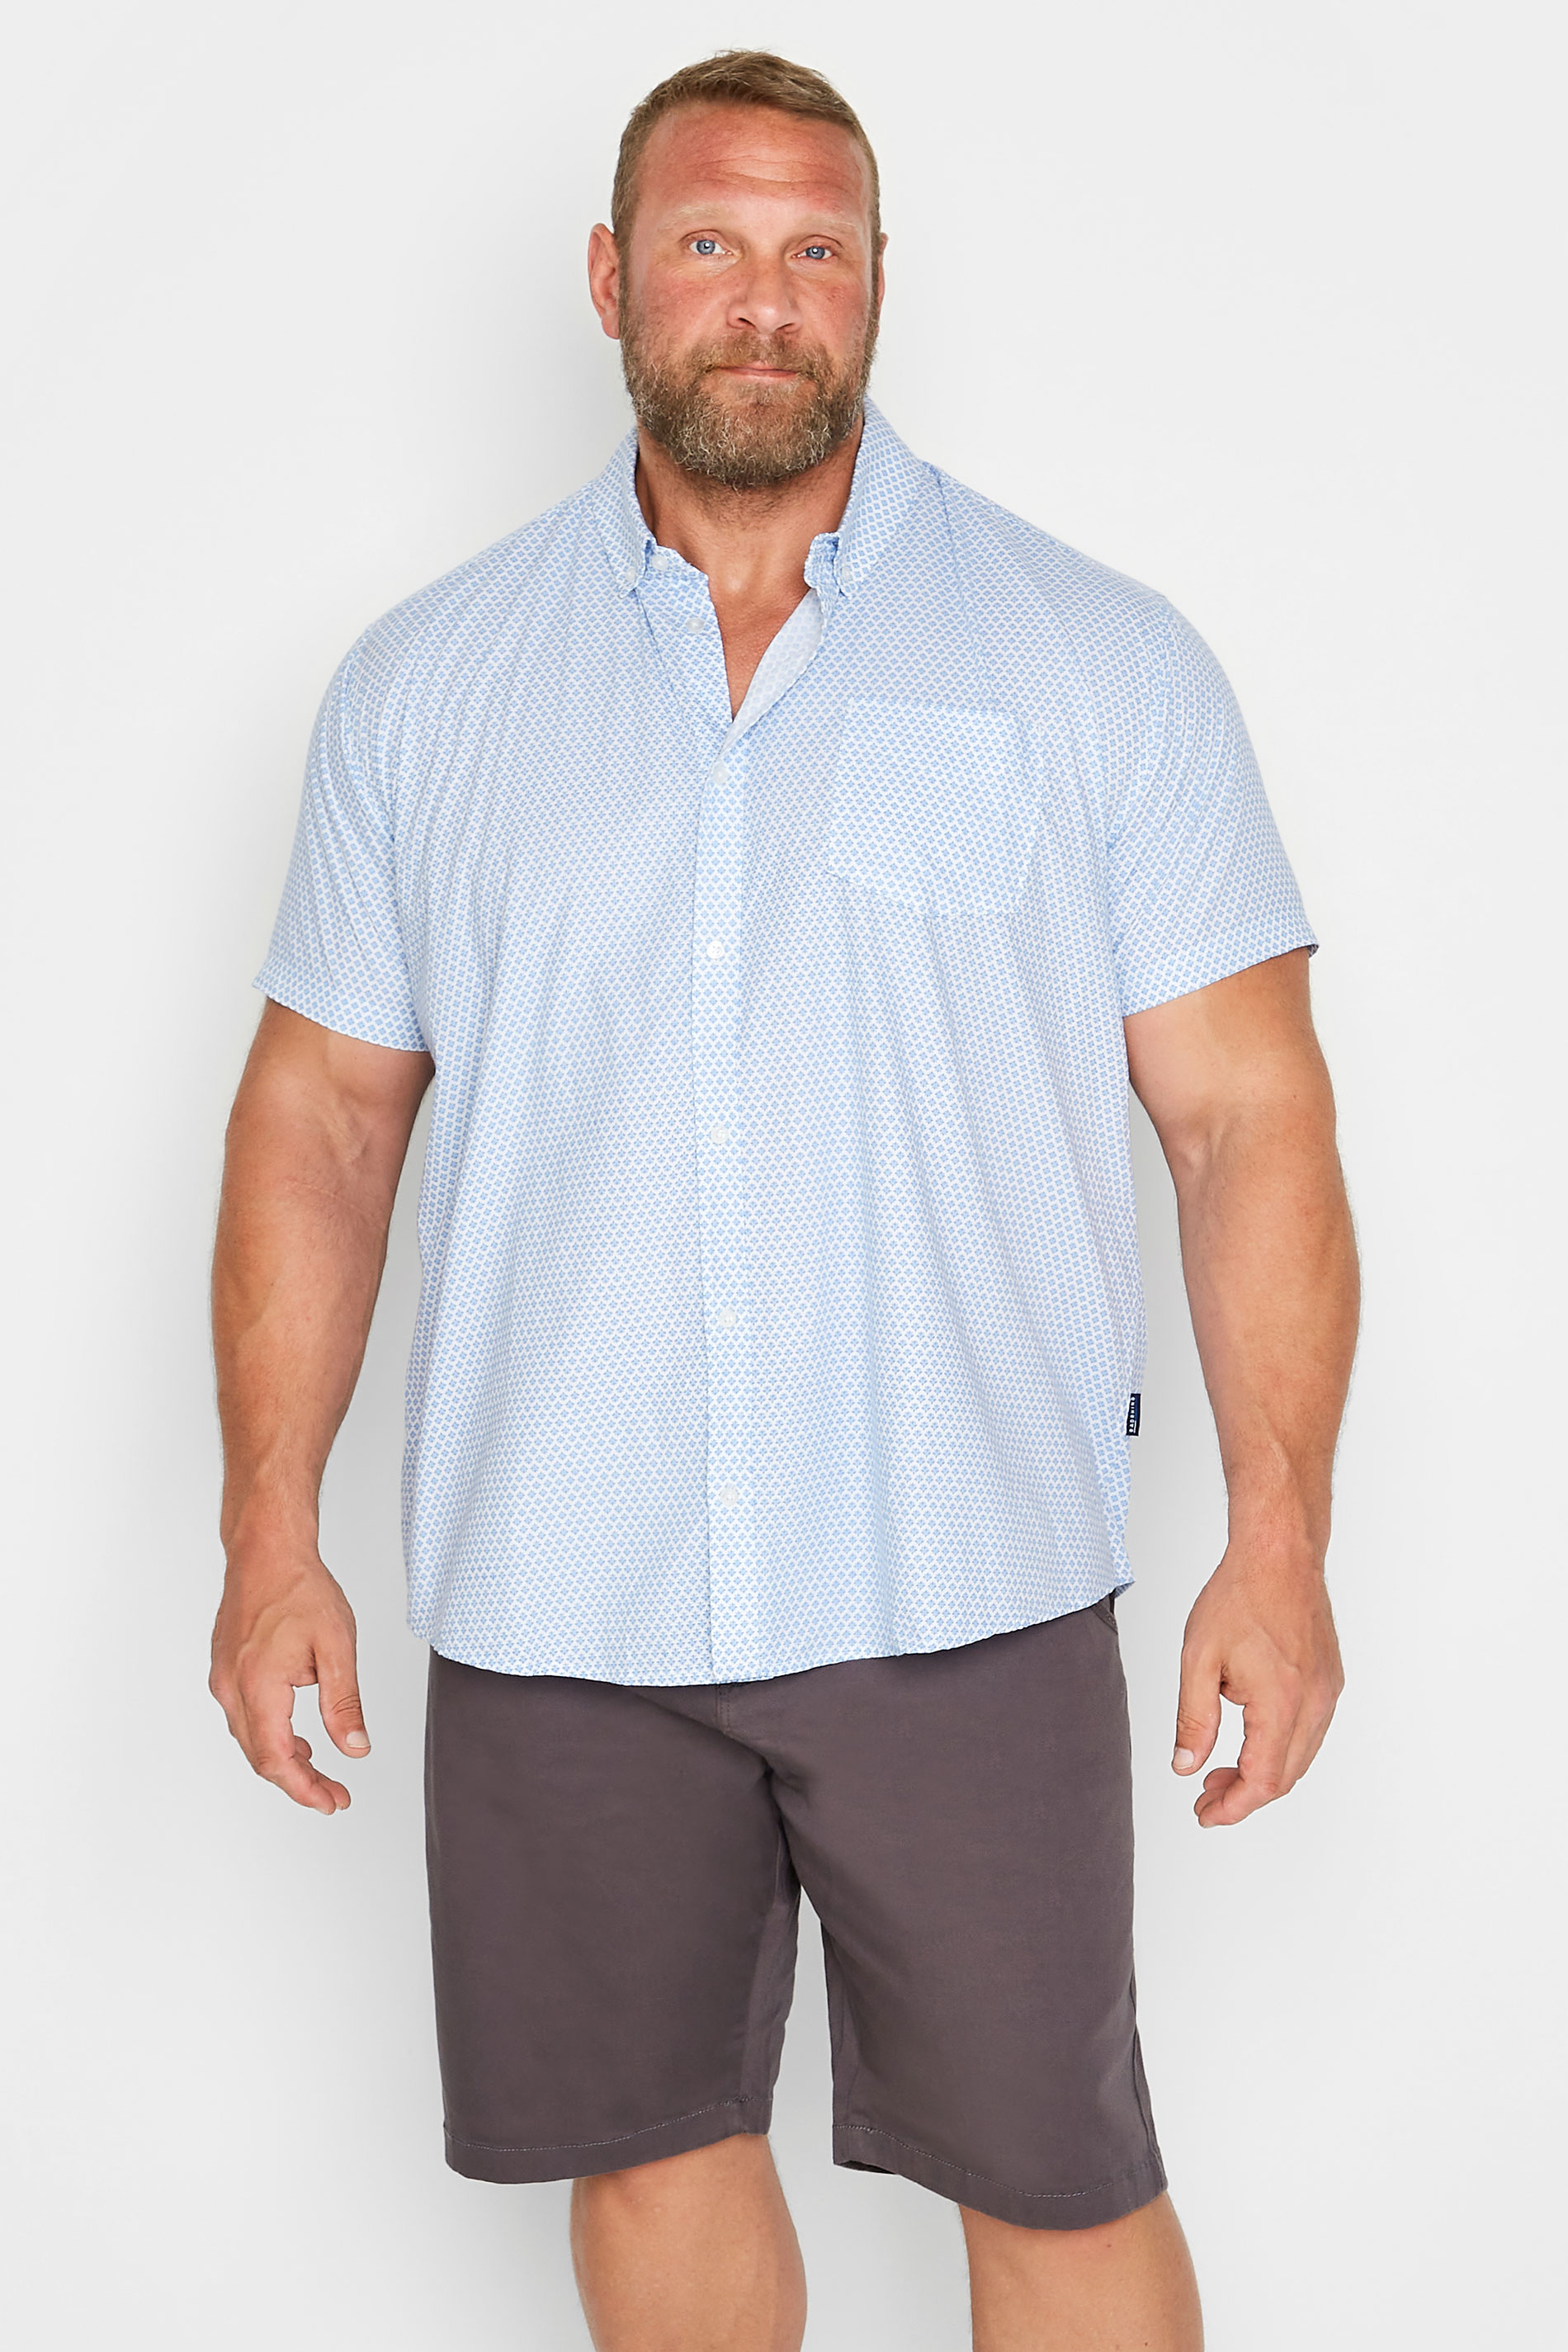 BadRhino Big & Tall White & Blue Geometric Print Poplin Shirt | BadRhino 1